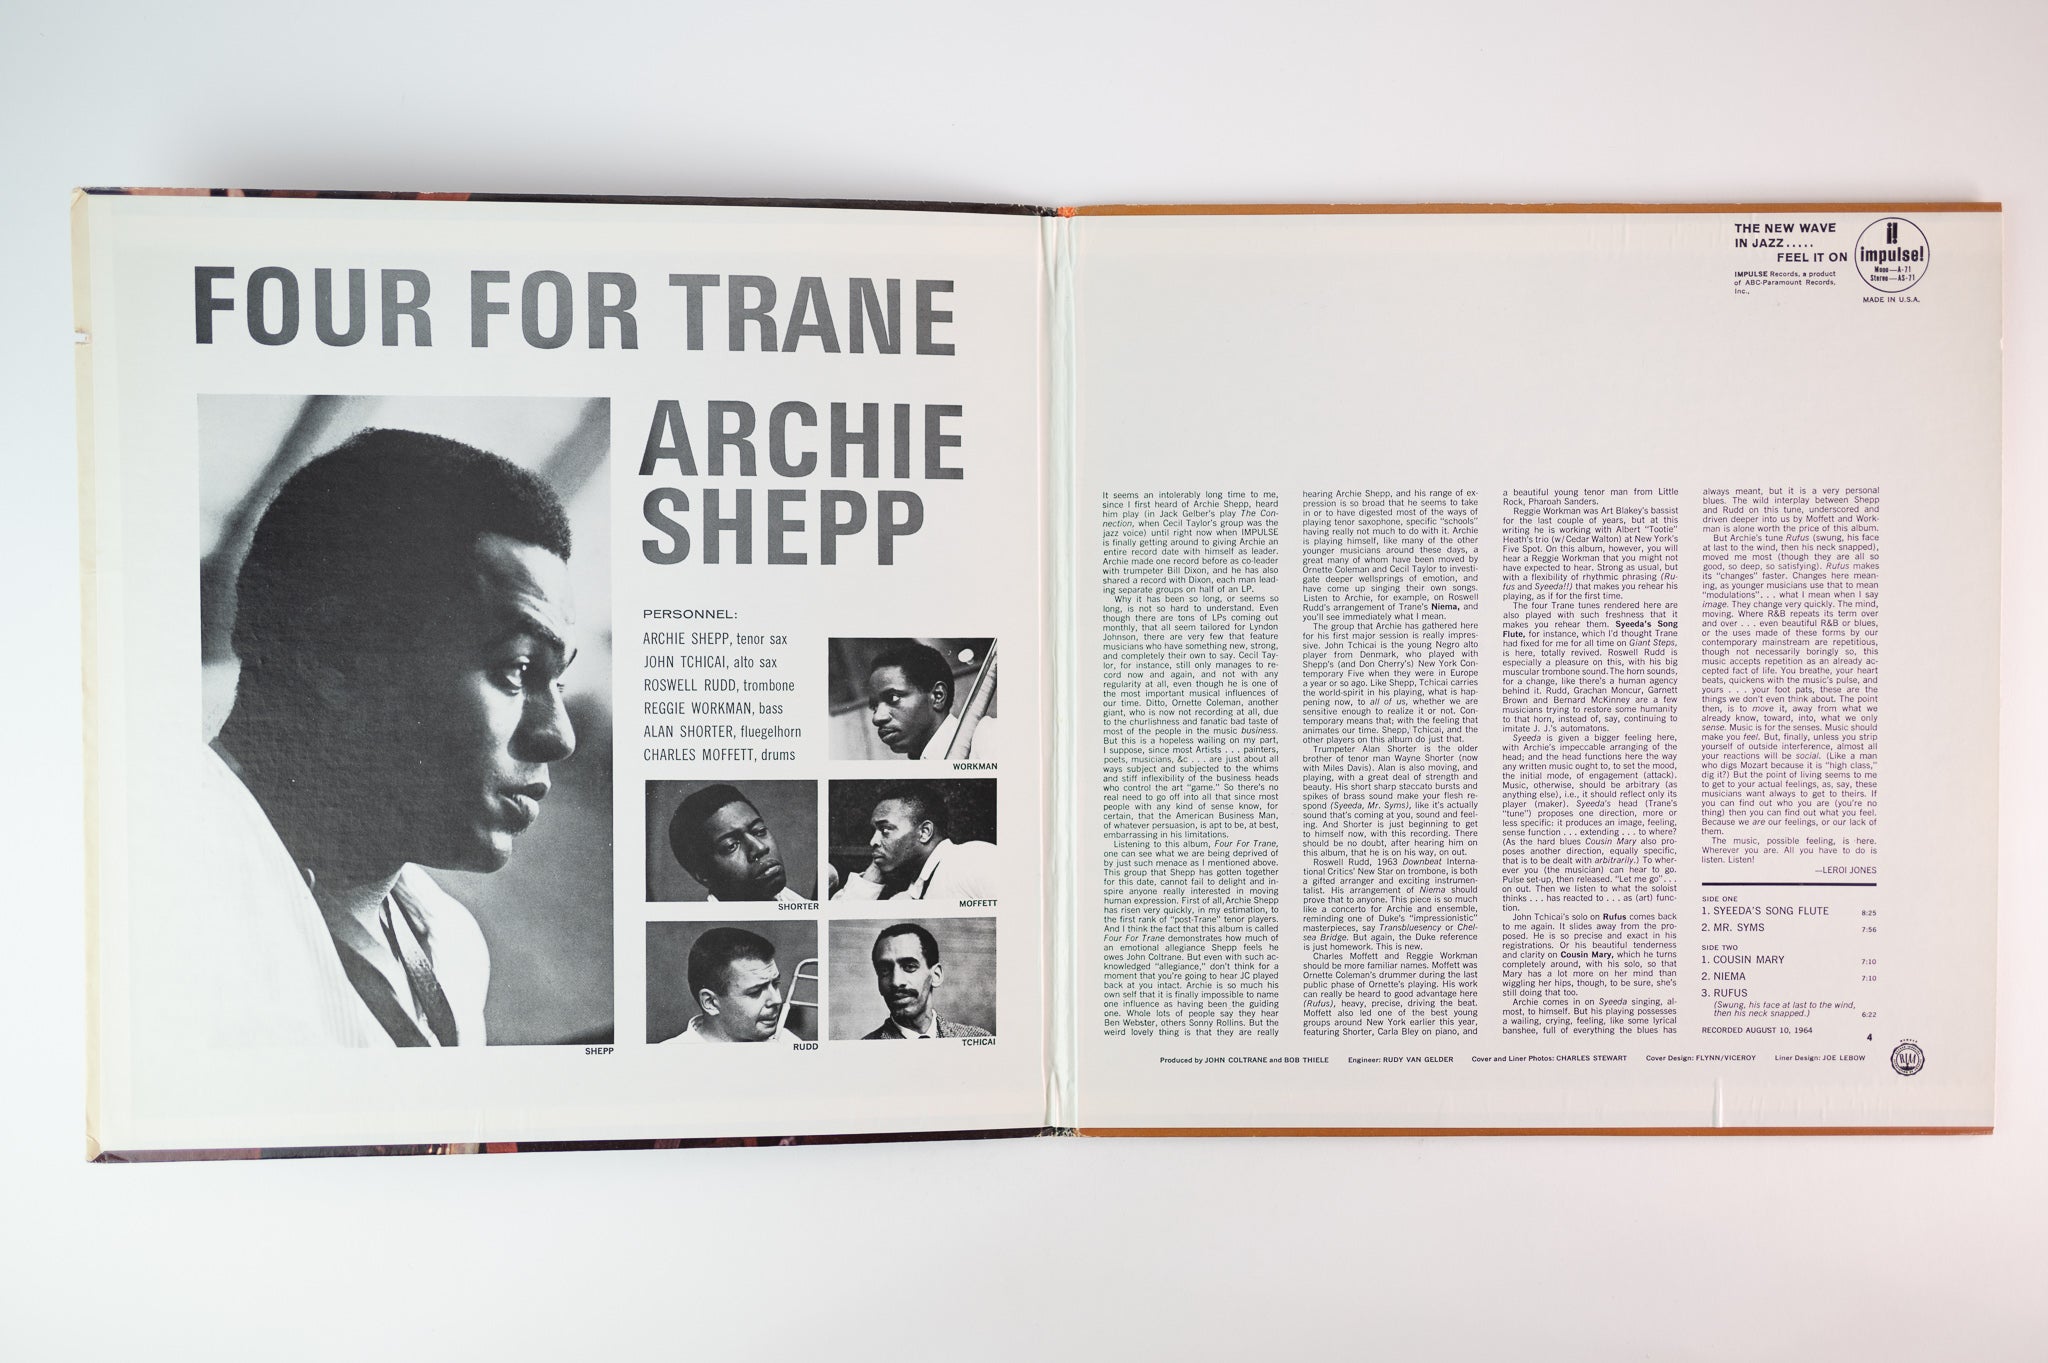 Archie Shepp - Four For Trane on ABC Impluse 1975 Reissue